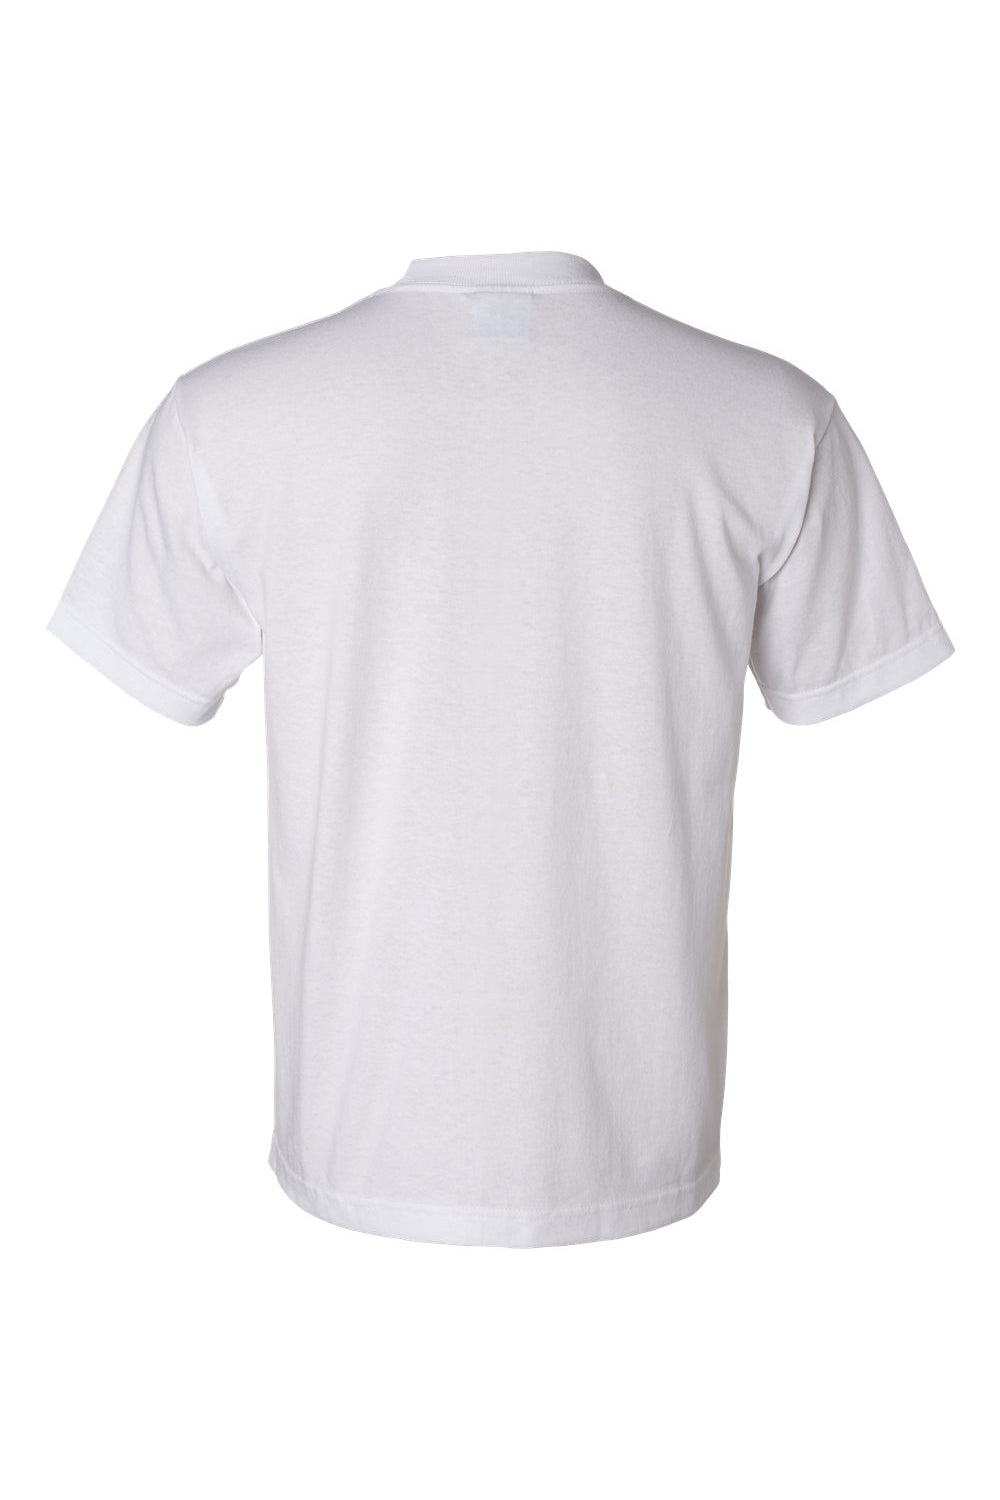 Bayside 1701 Mens USA Made Short Sleeve Crewneck T-Shirt White Flat Back